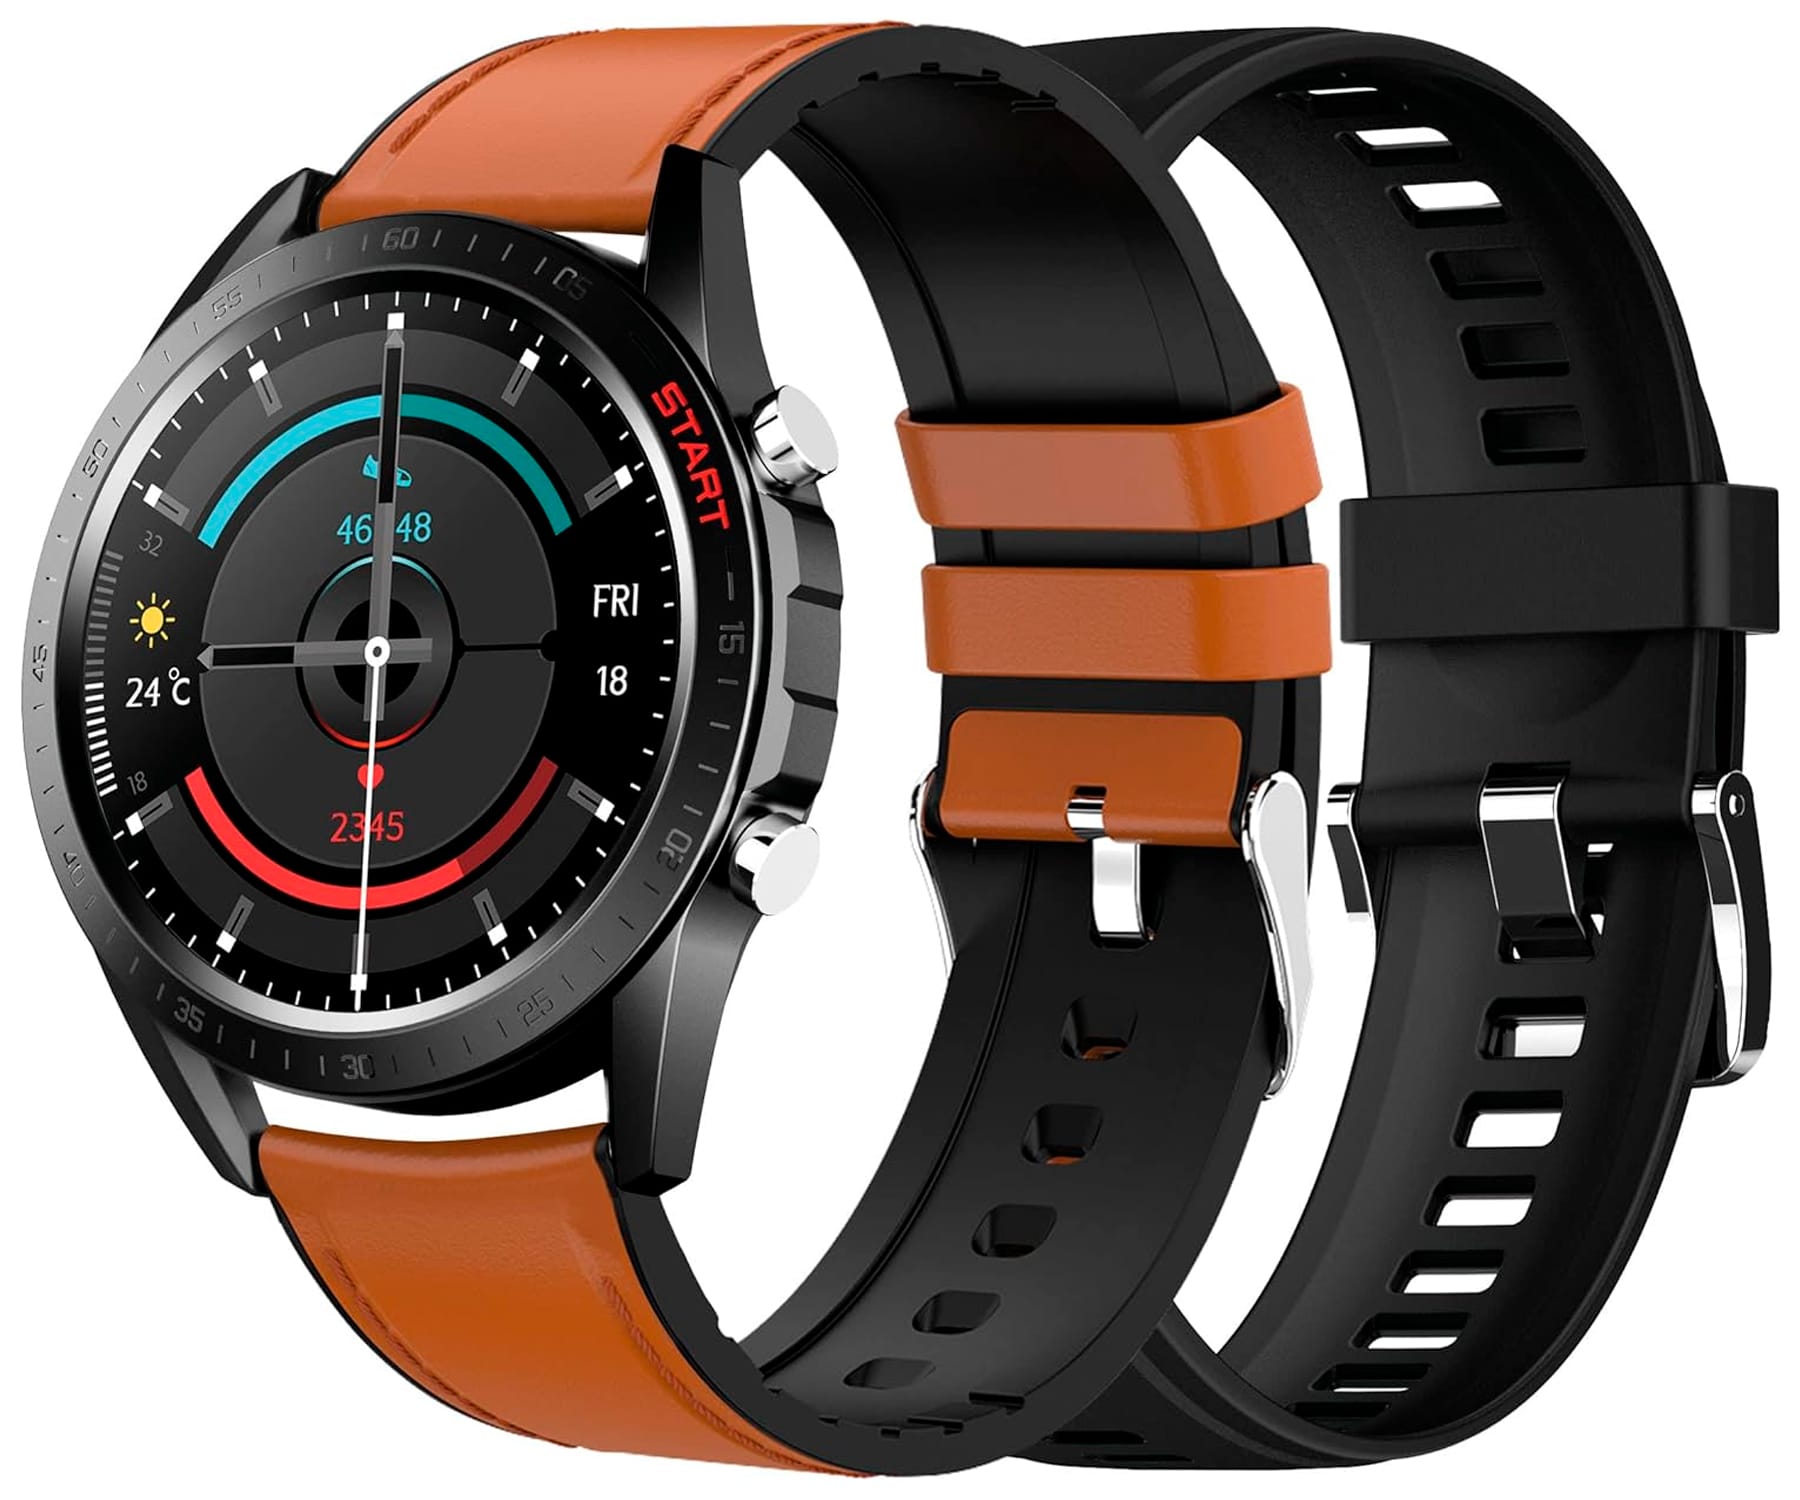 DCU Smartwatch Elegance 2 correas Negra + Marrón / Smartwatch 1.32